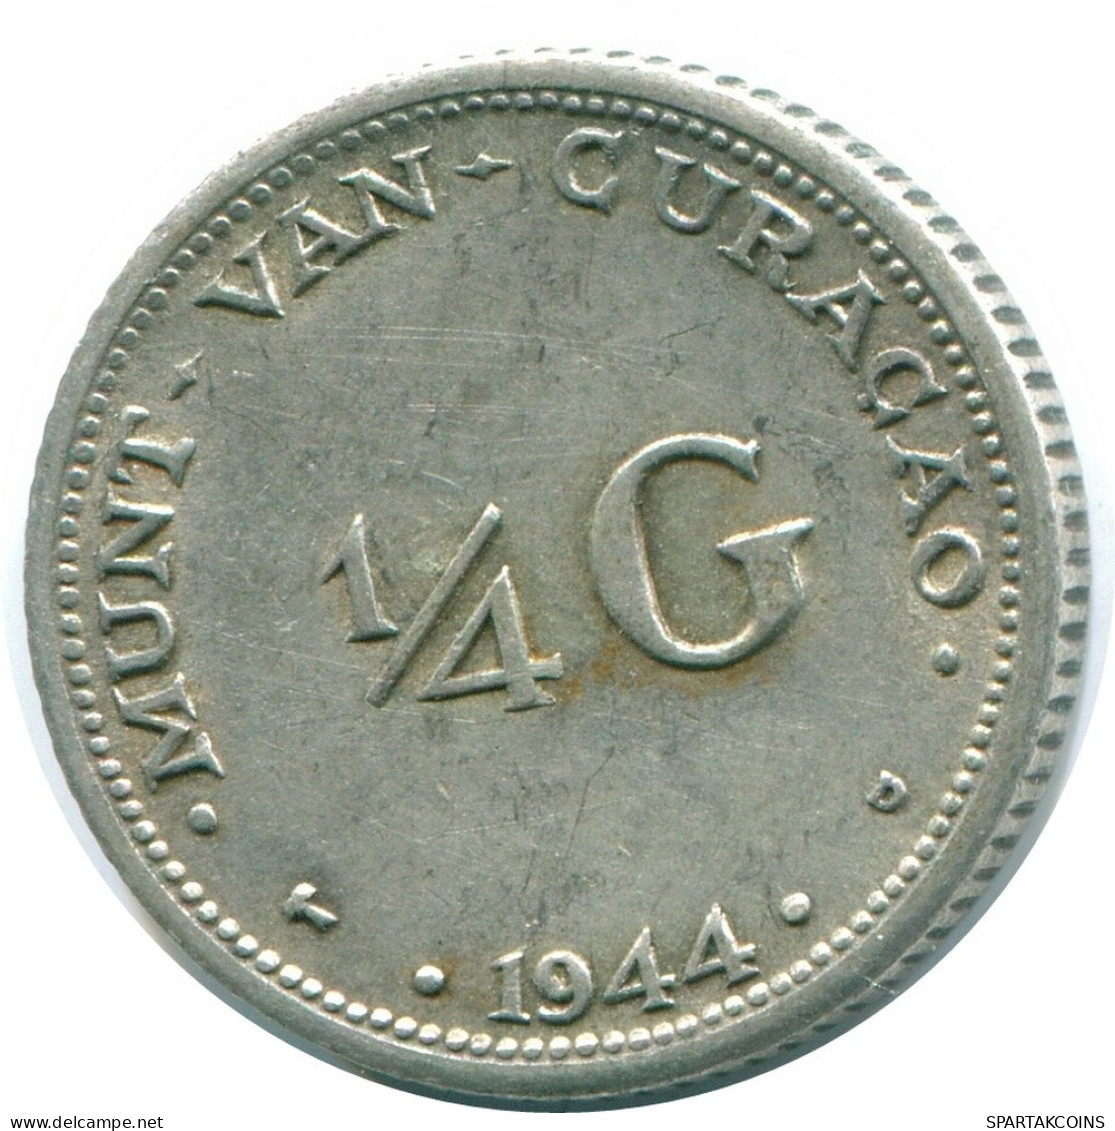 1/4 GULDEN 1944 CURACAO Netherlands SILVER Colonial Coin #NL10553.4.U.A - Curaçao